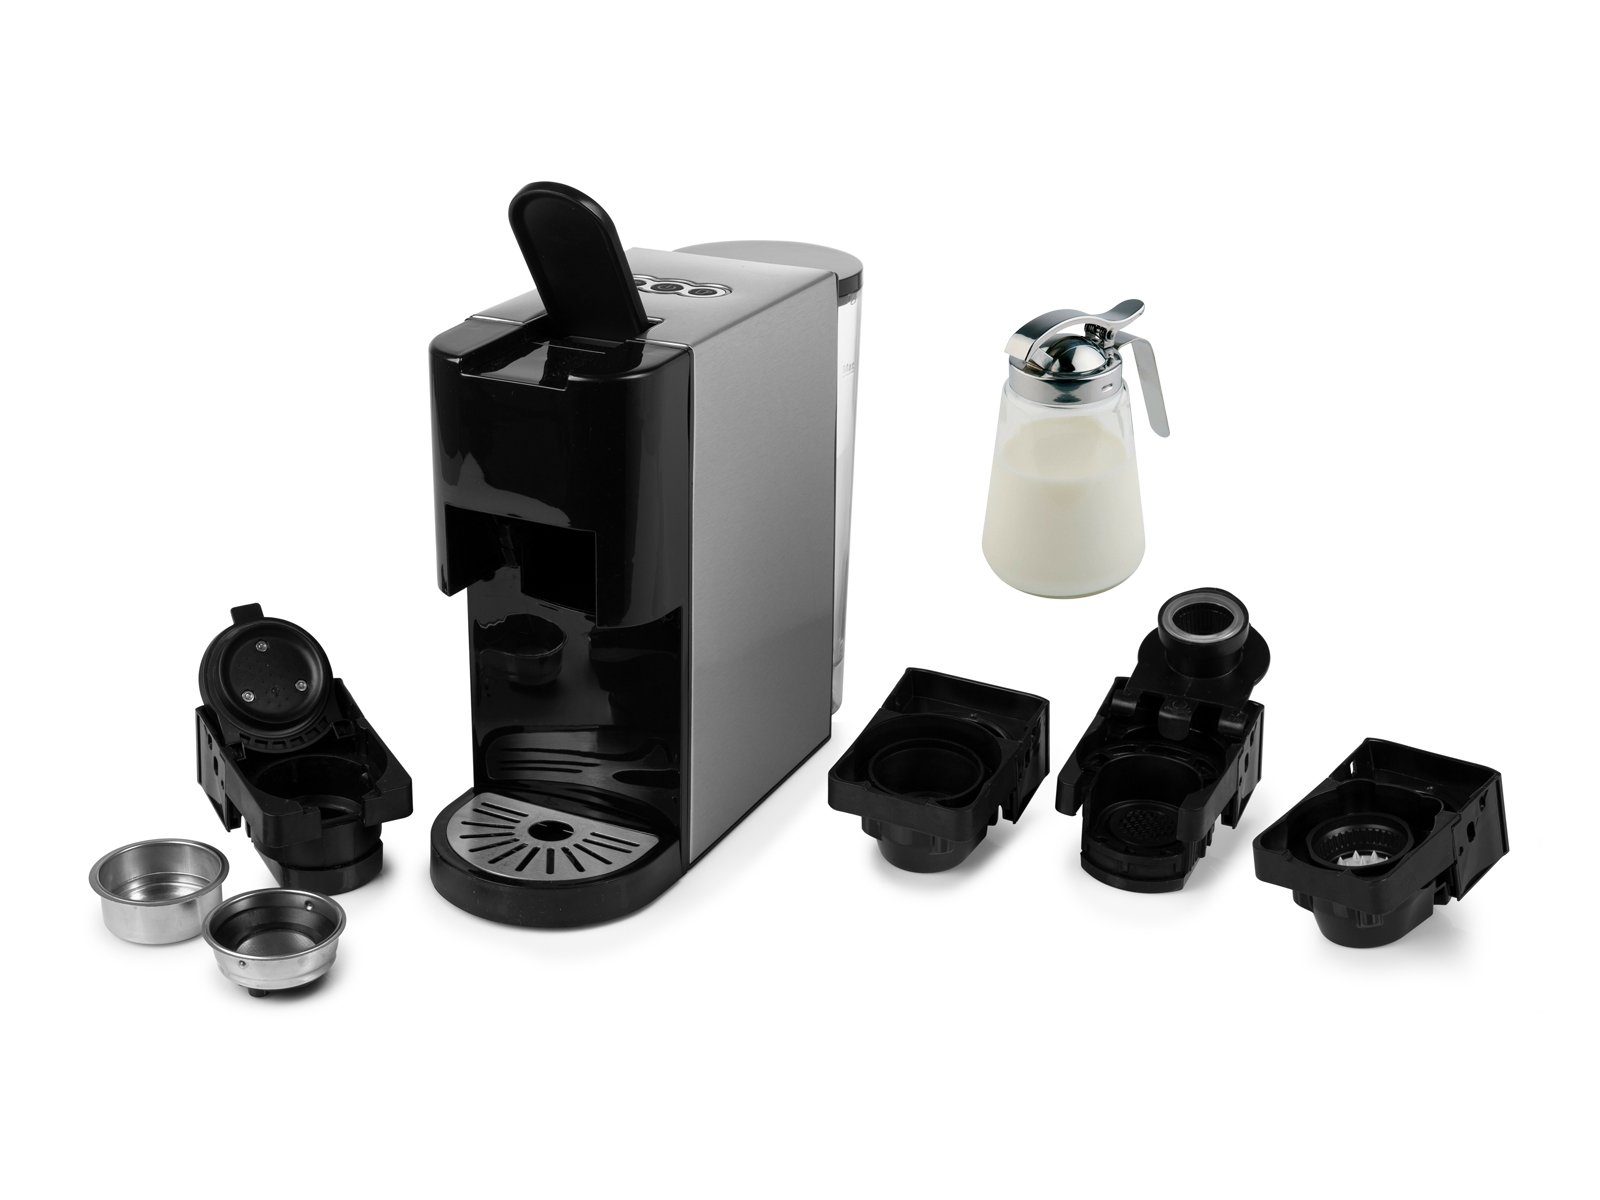 & ESE Kaffee-Pulver Pads Setpoint Pad-Maschine Milchkännchen & Kapselmaschine, Kapseln 1 Tassen